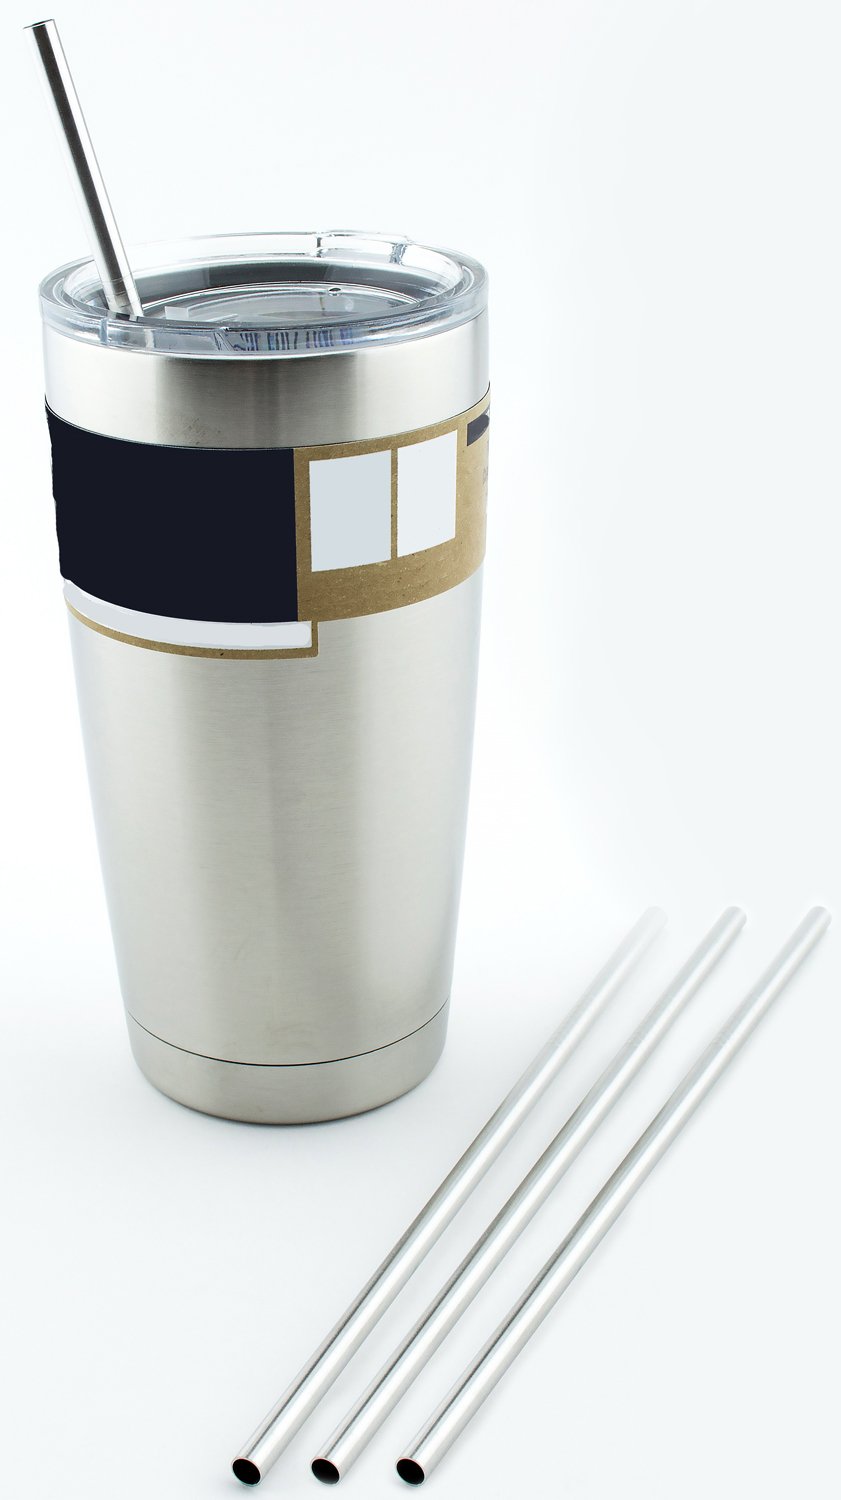 4 Stainless Steel Drinking Straws fits Yeti Tumbler Rambler Cups